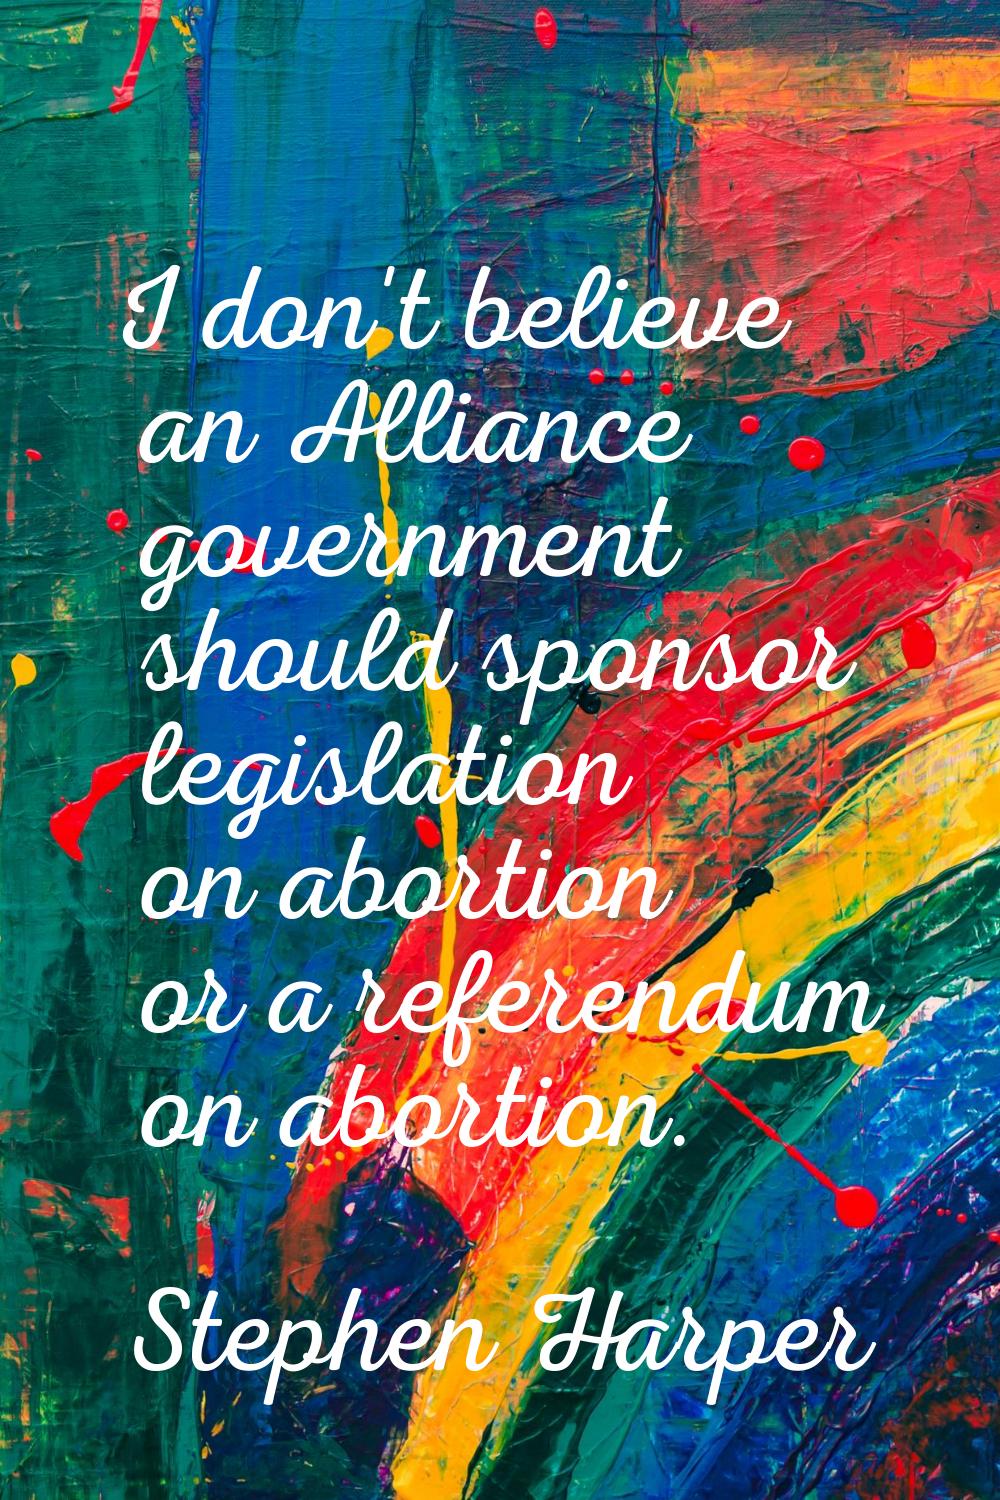 I don't believe an Alliance government should sponsor legislation on abortion or a referendum on ab